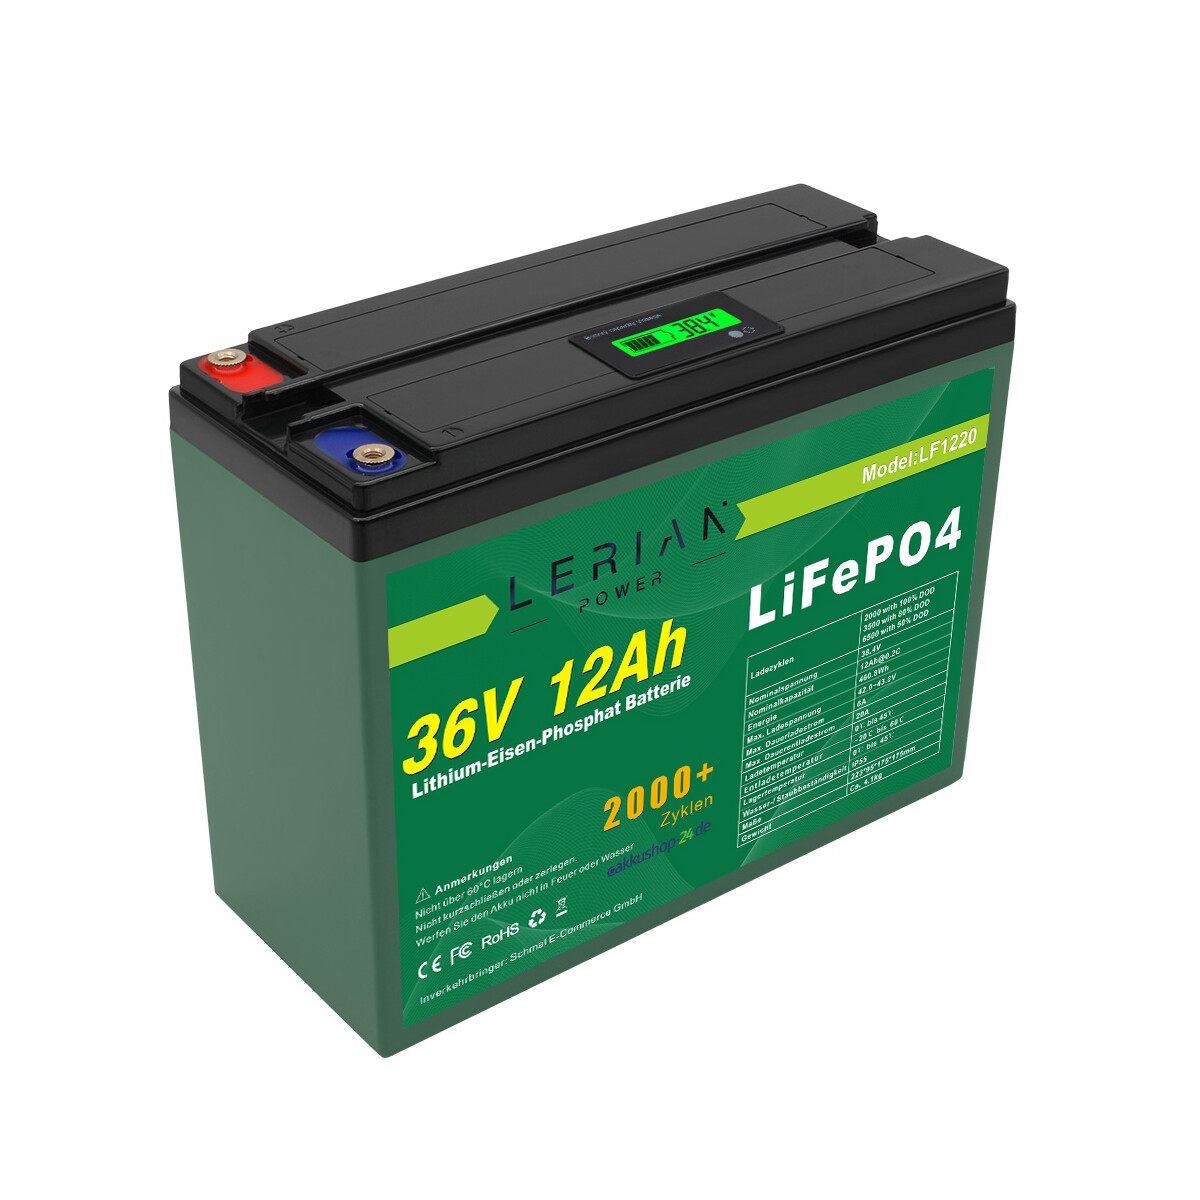 LiFePO4 Akku 36V 12Ah 20A Lithium-Eisen-Phosphat Batterie, 339,00 €